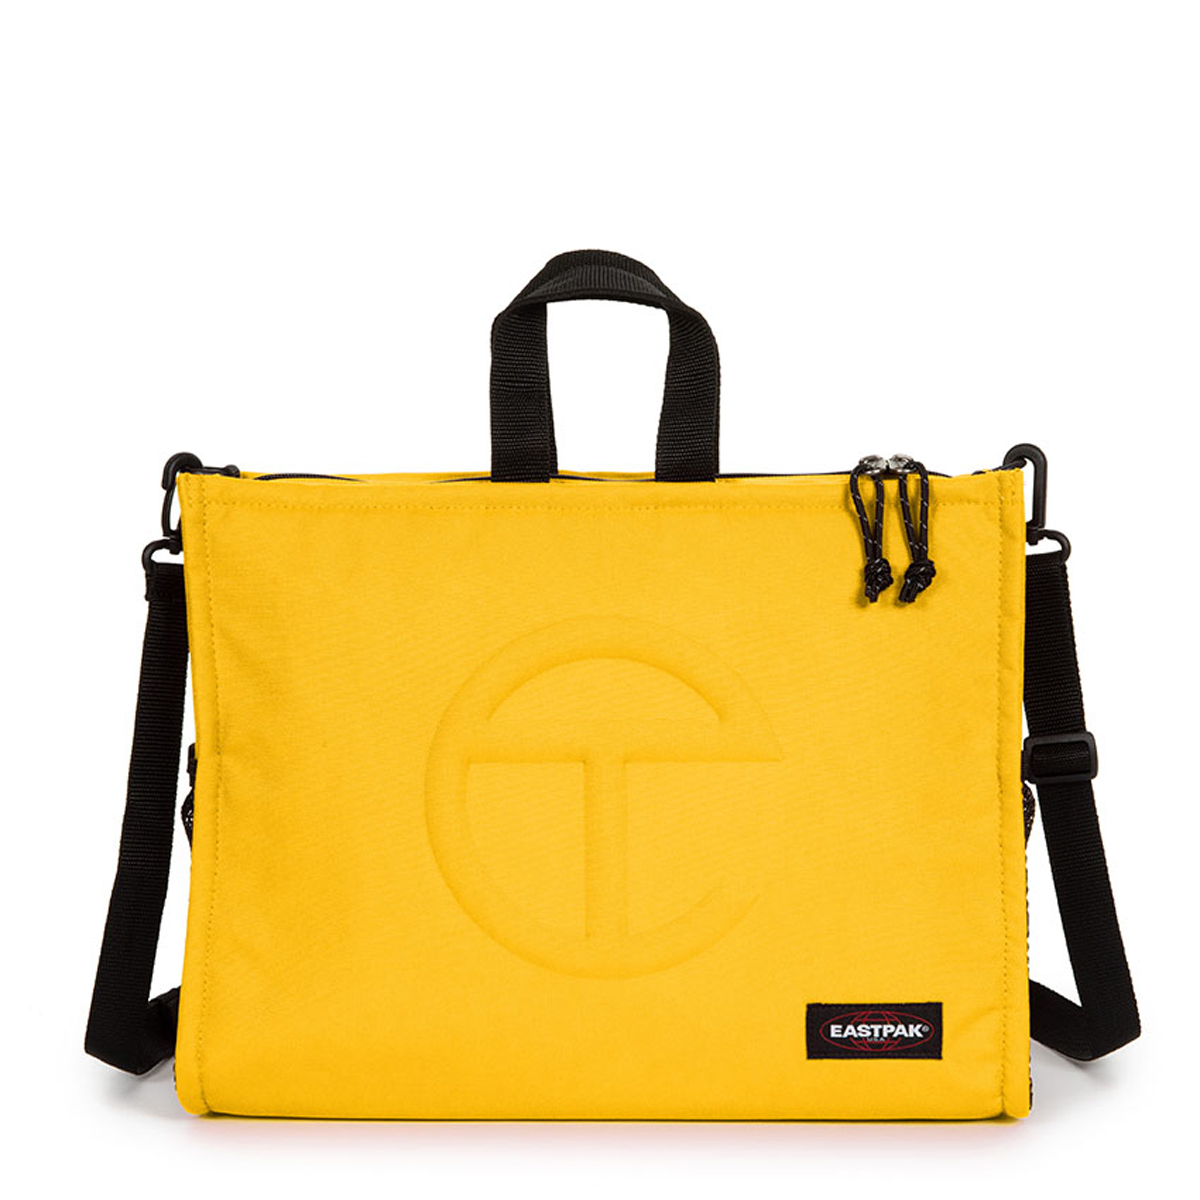 Telfar x Eastpak Yellow Bag Collab Restock: Release Date